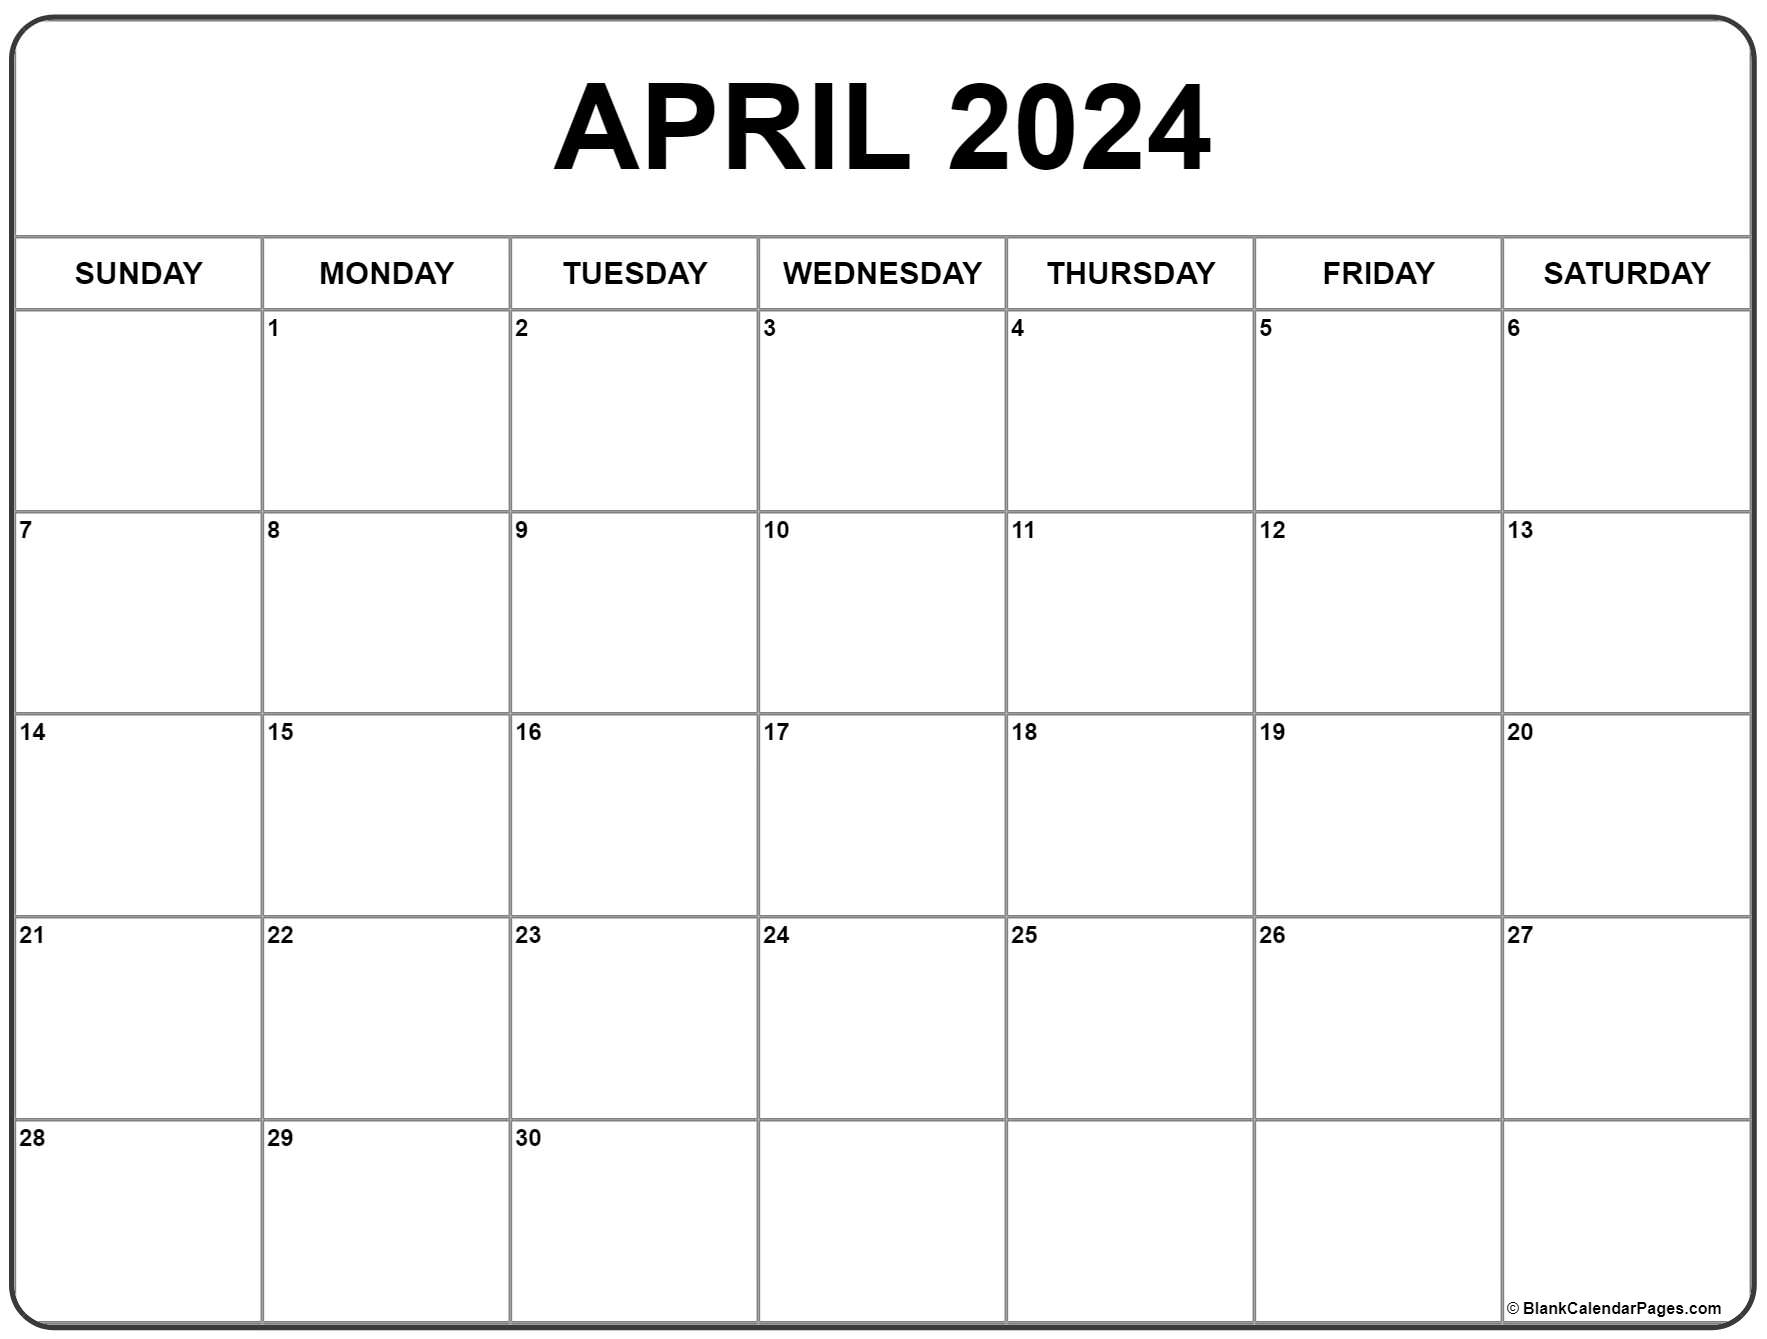 April 2024 Monthly Calendar Printable 99F - Free Printable 2024 Monthly Calendar April